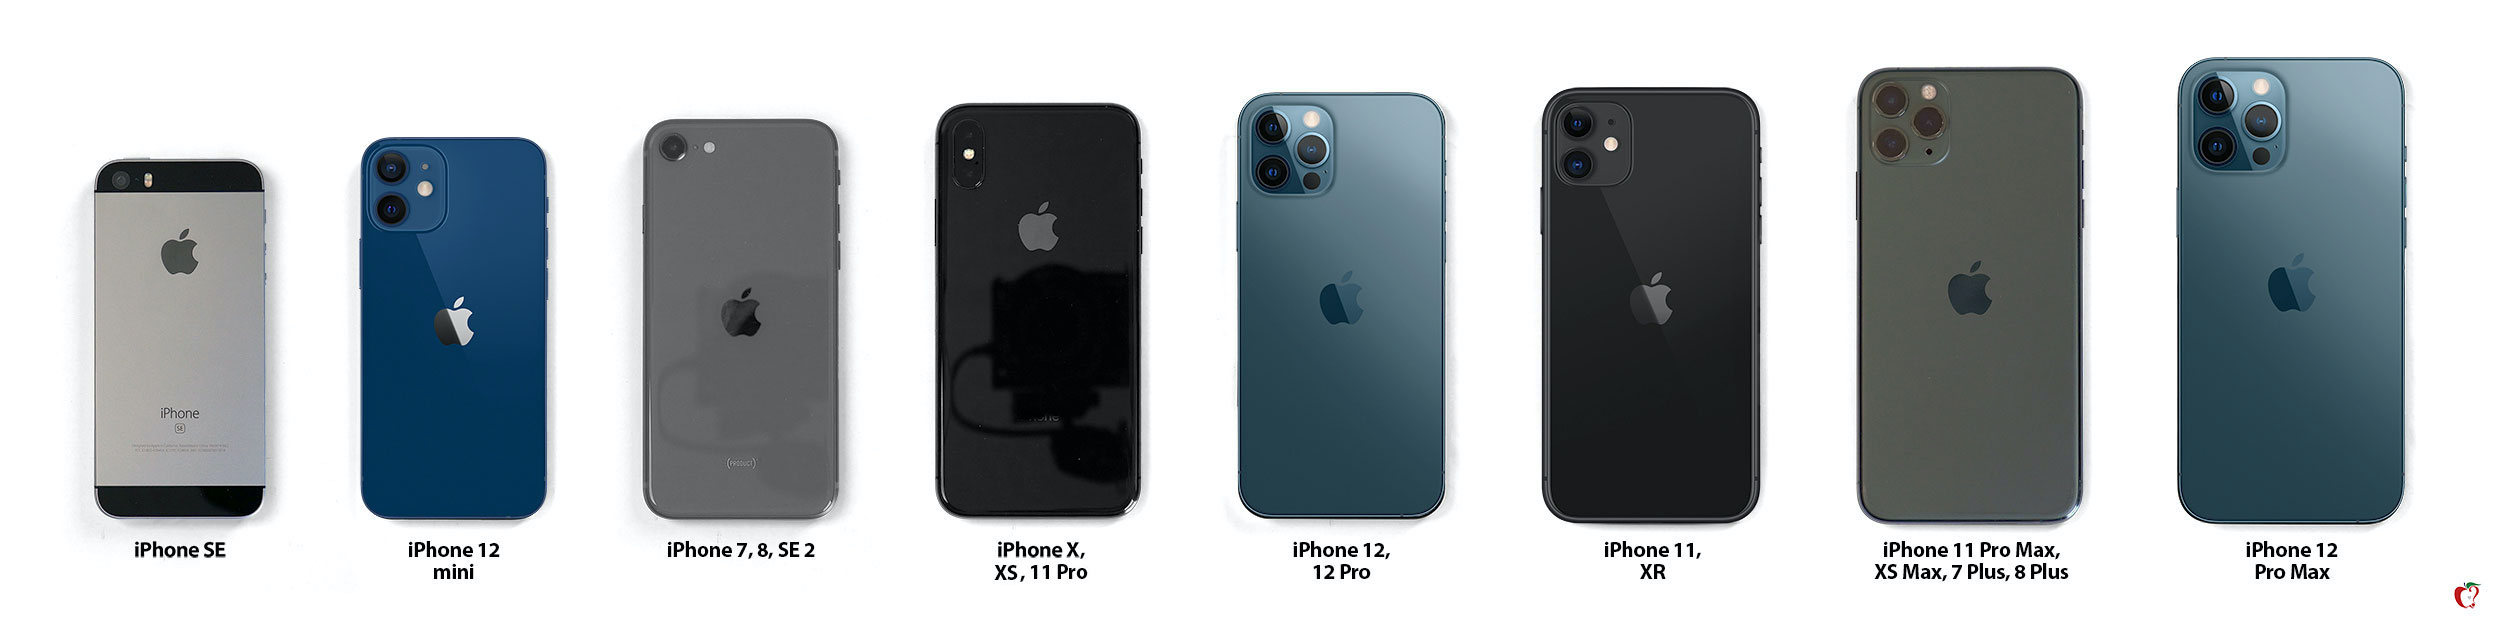 【印刷可能】 apple iphone 12 mini vs iphone 8 size 104357Apple iphone 12